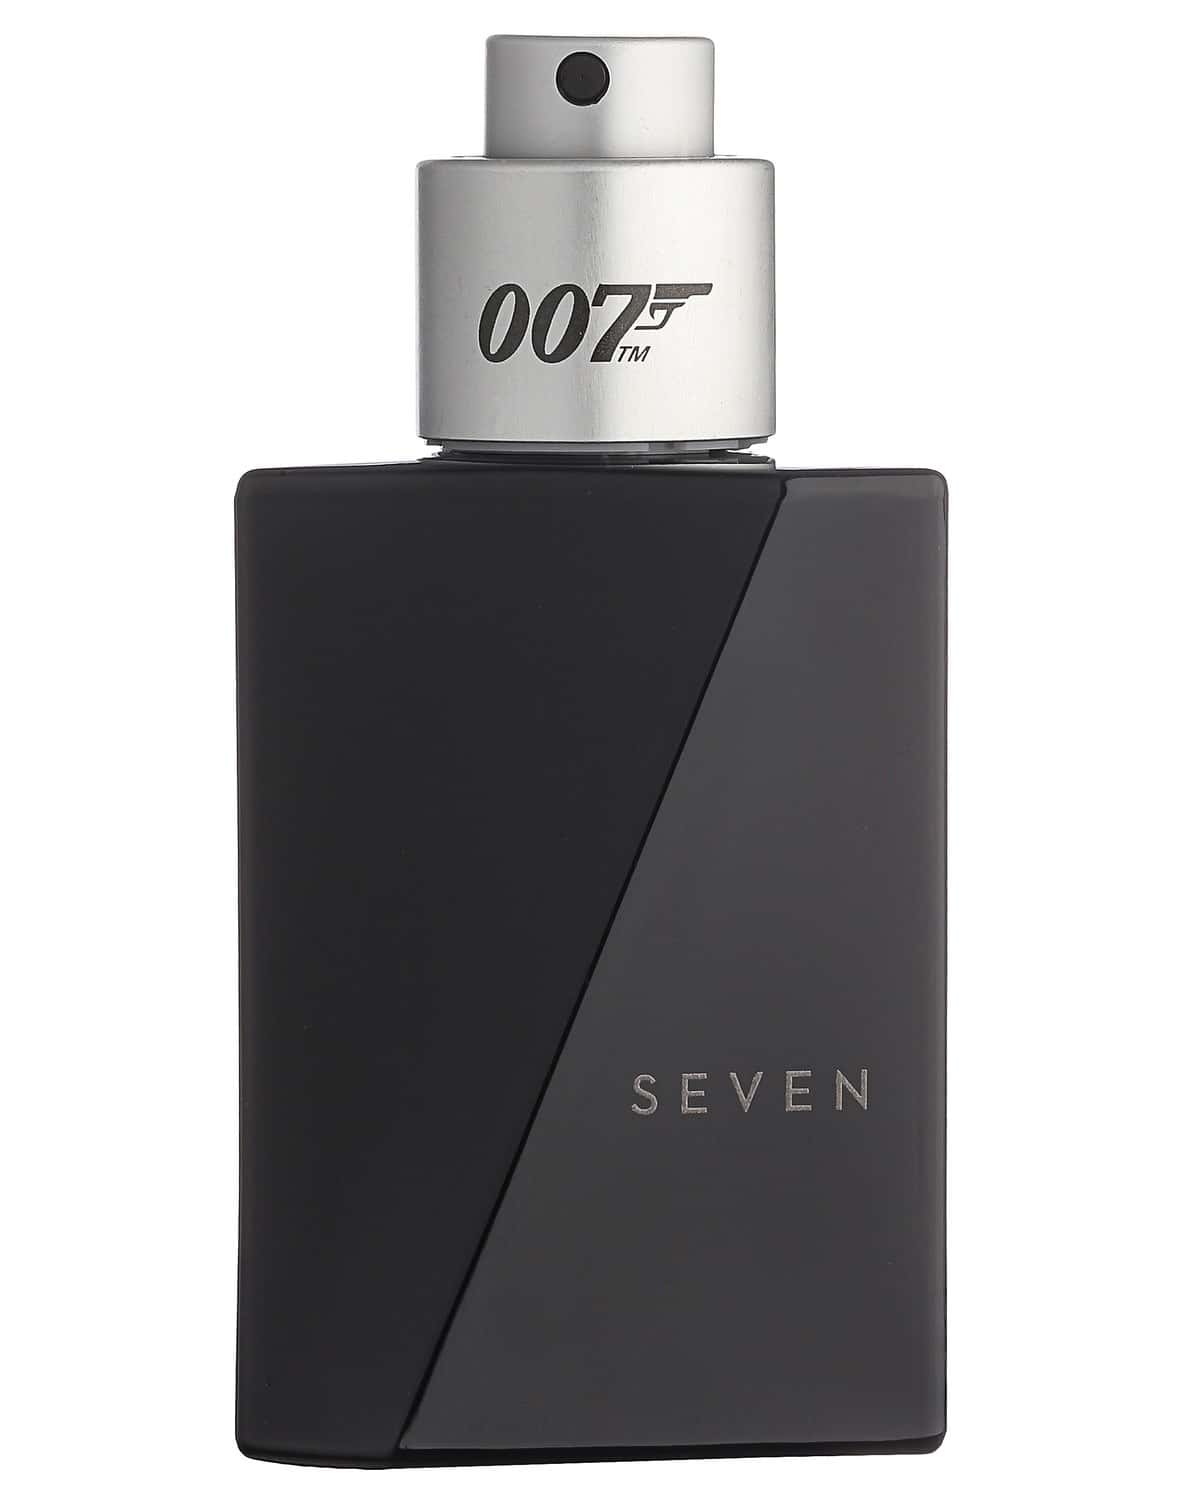 James Bond 007 Seven Edt 30ml